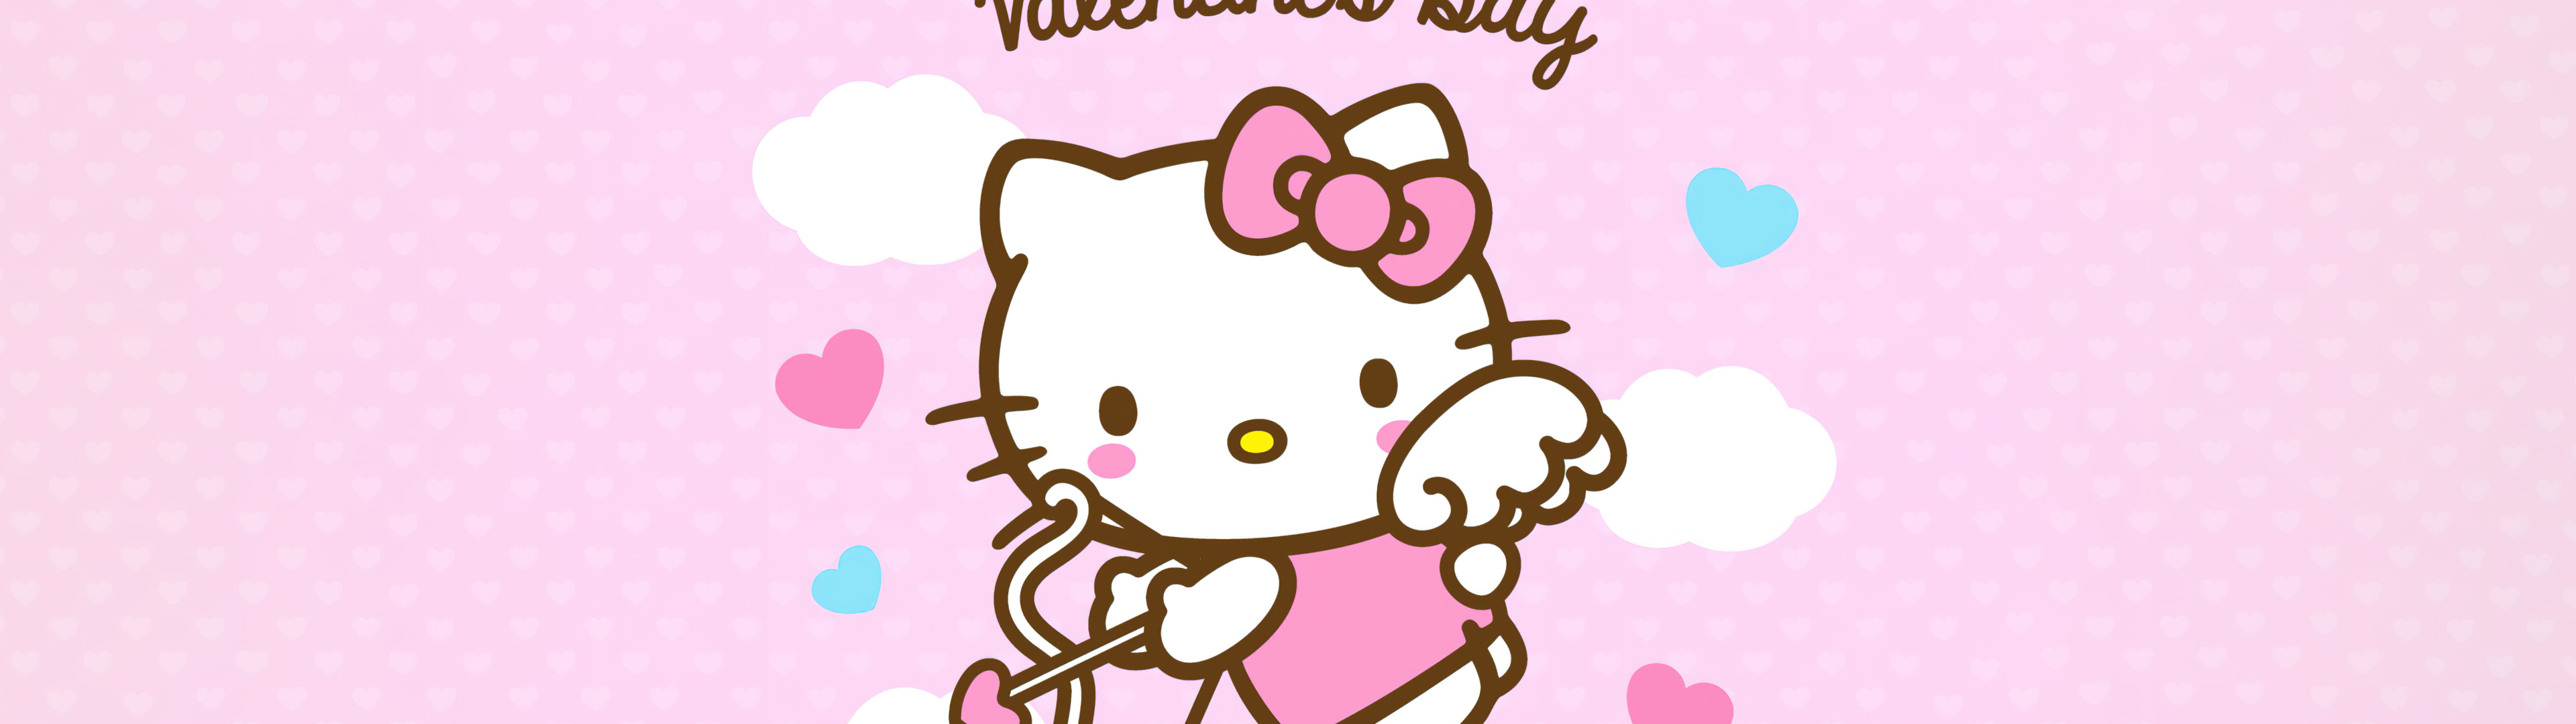 hello kitty valentines day wallpaper